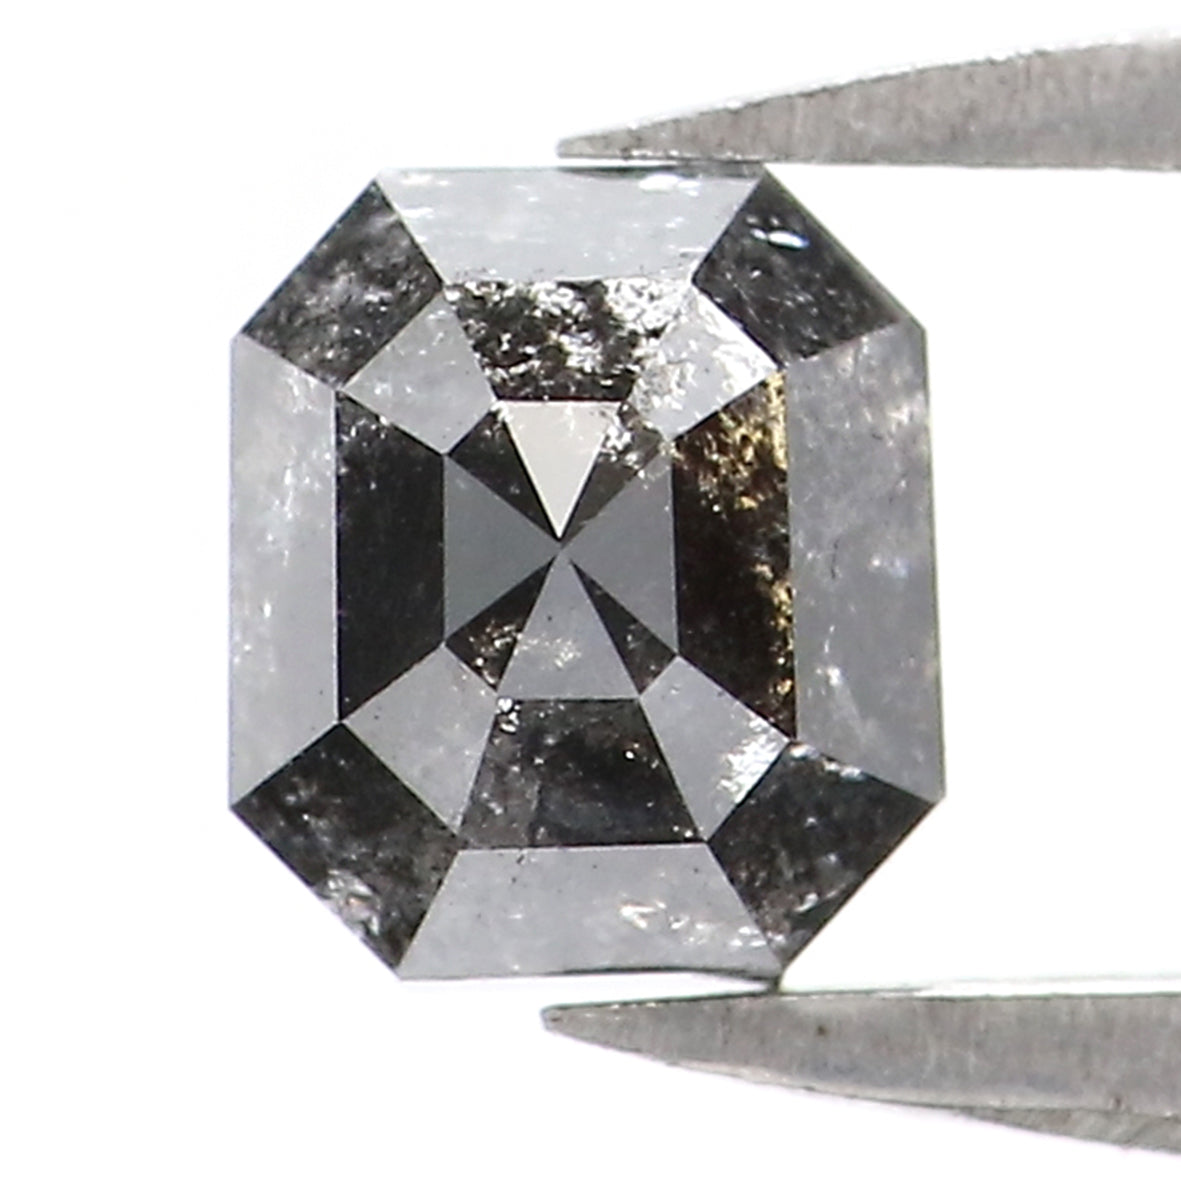 0.80 CT Natural Loose Emerald Shape Diamond Salt And Pepper Emerald Diamond 5.10 MM Black Grey Color Emerald Shape Rose Cut Diamond QK1796